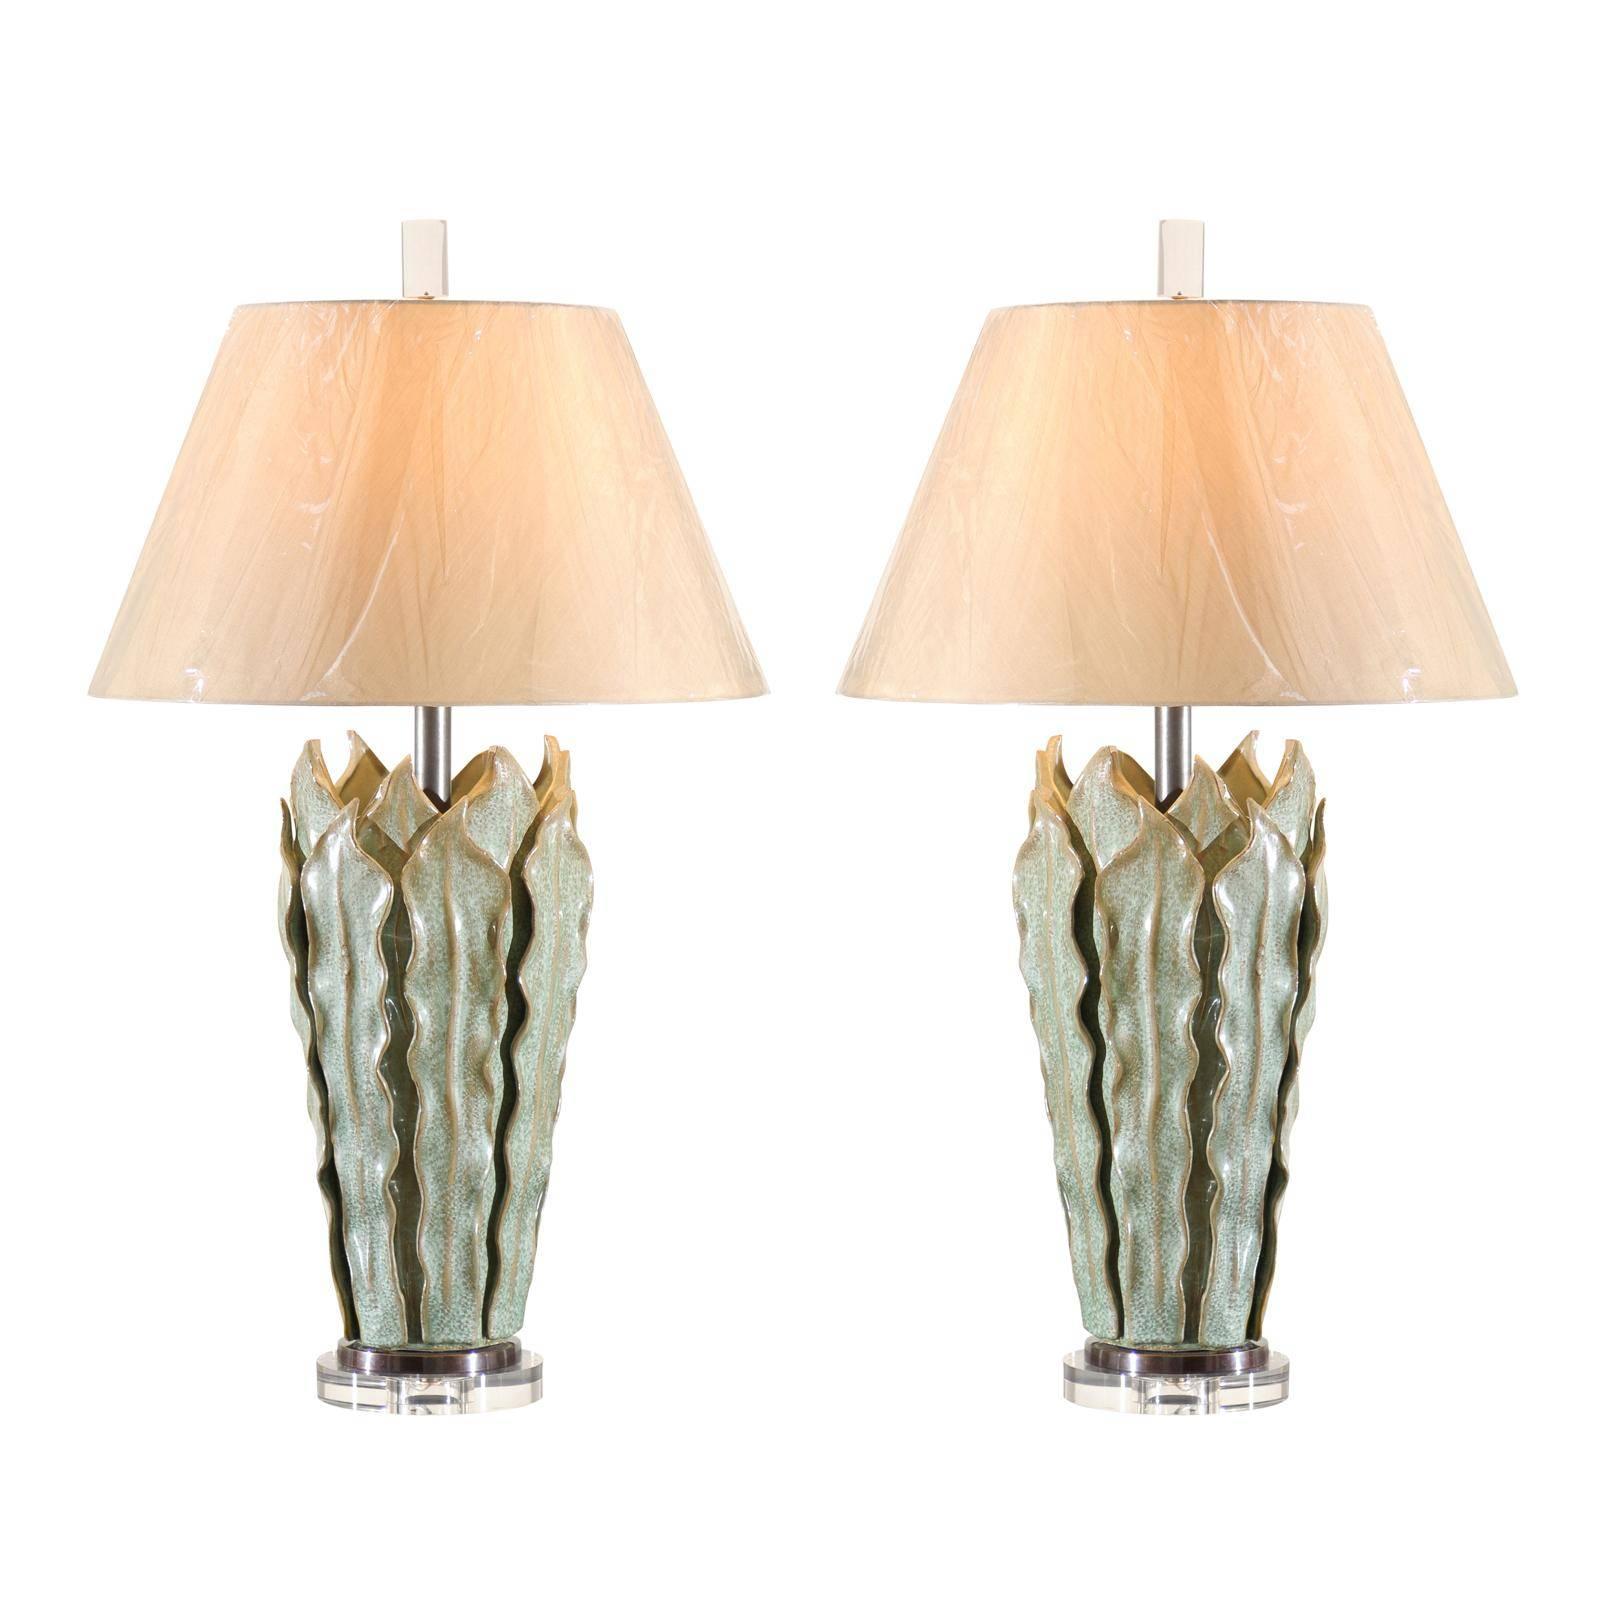 Stunning Pair of Ceramic Fern Leaf Vessels as Custom Lamps